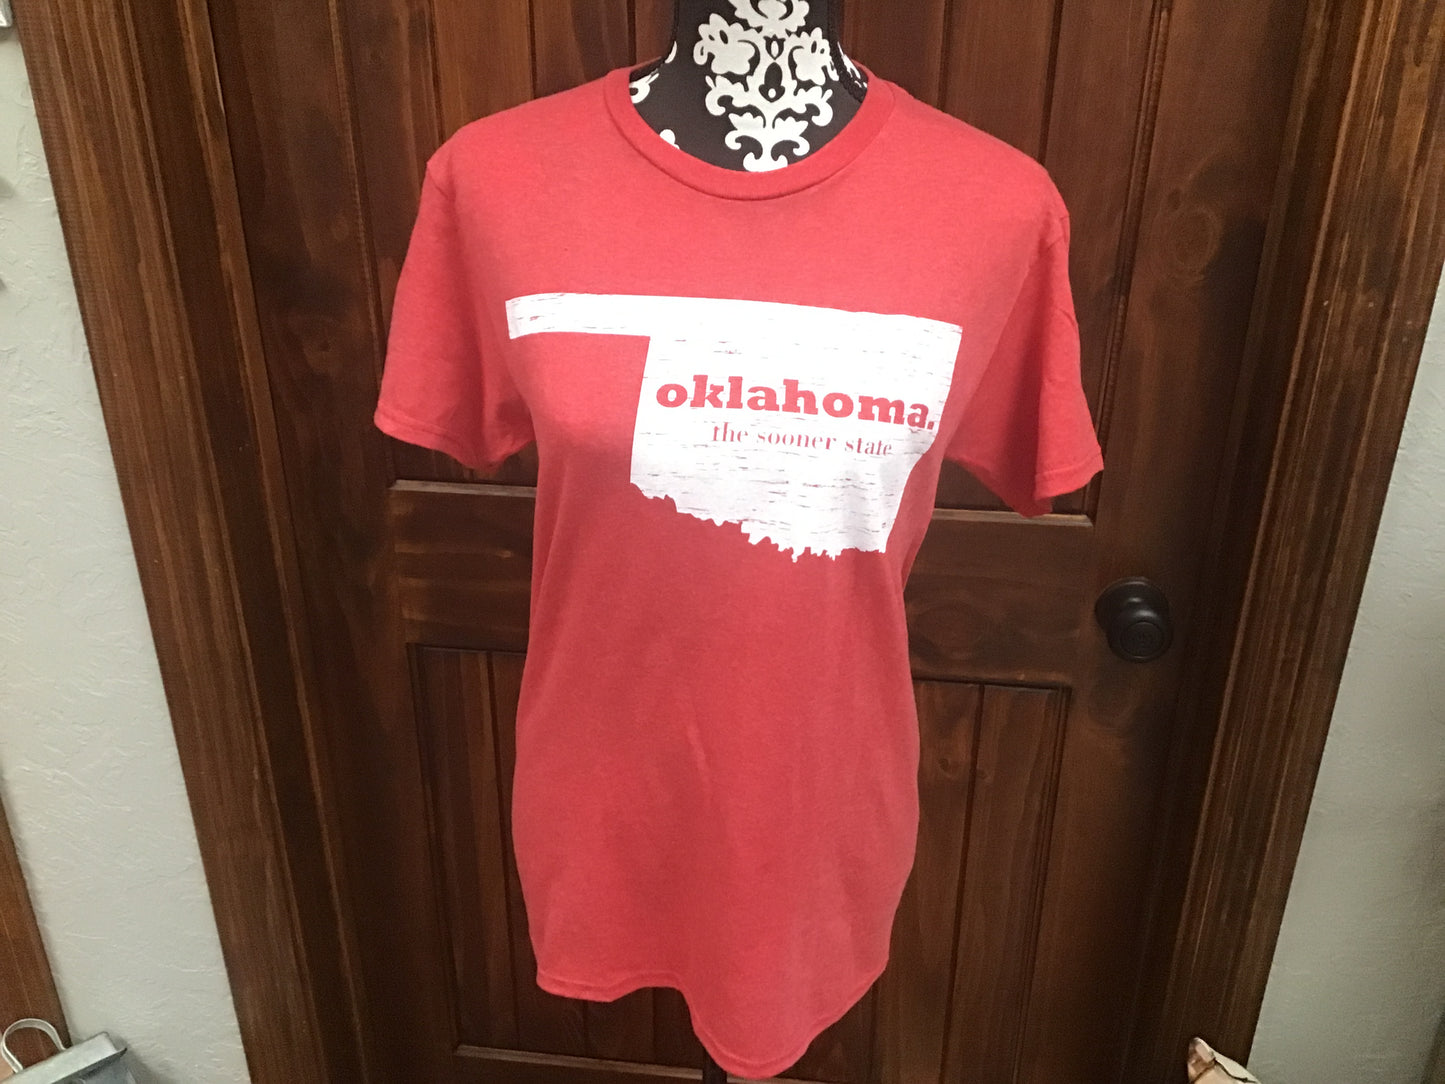 Oklahoma Sooner State T-Shirt